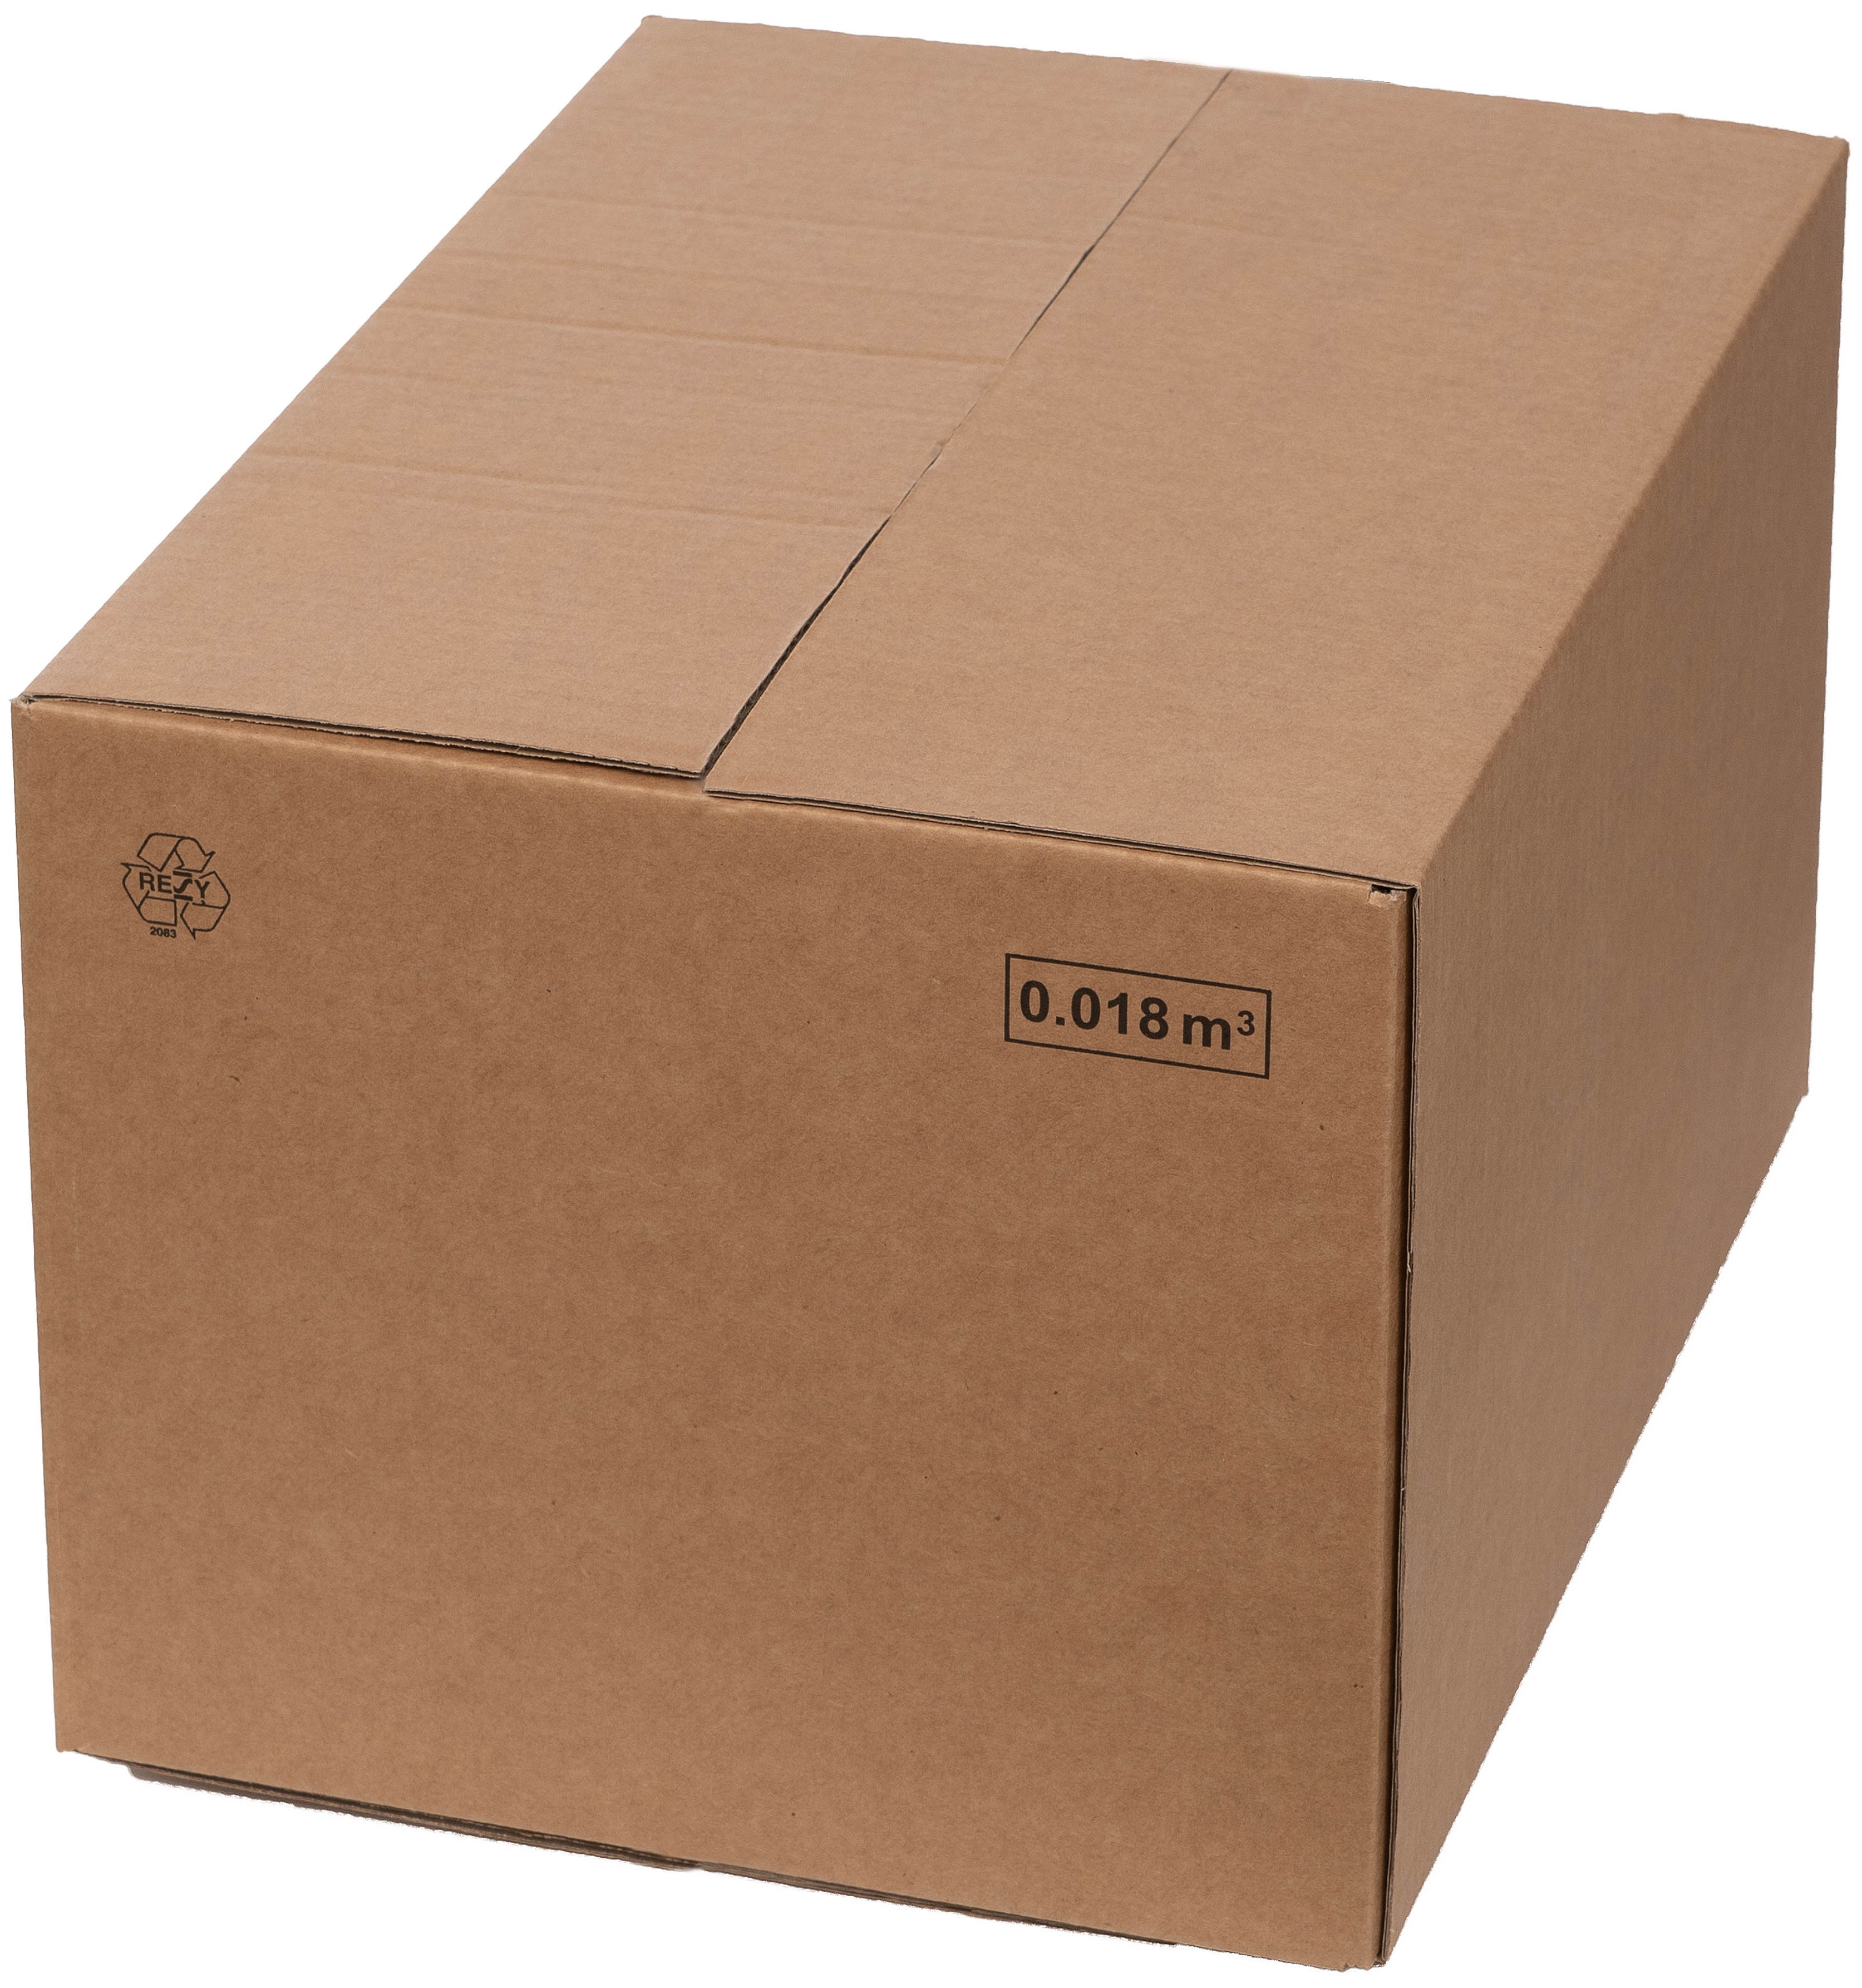 NEUTRAL Carton Ondule Box 277211 34X24X20cm 25 pcs.